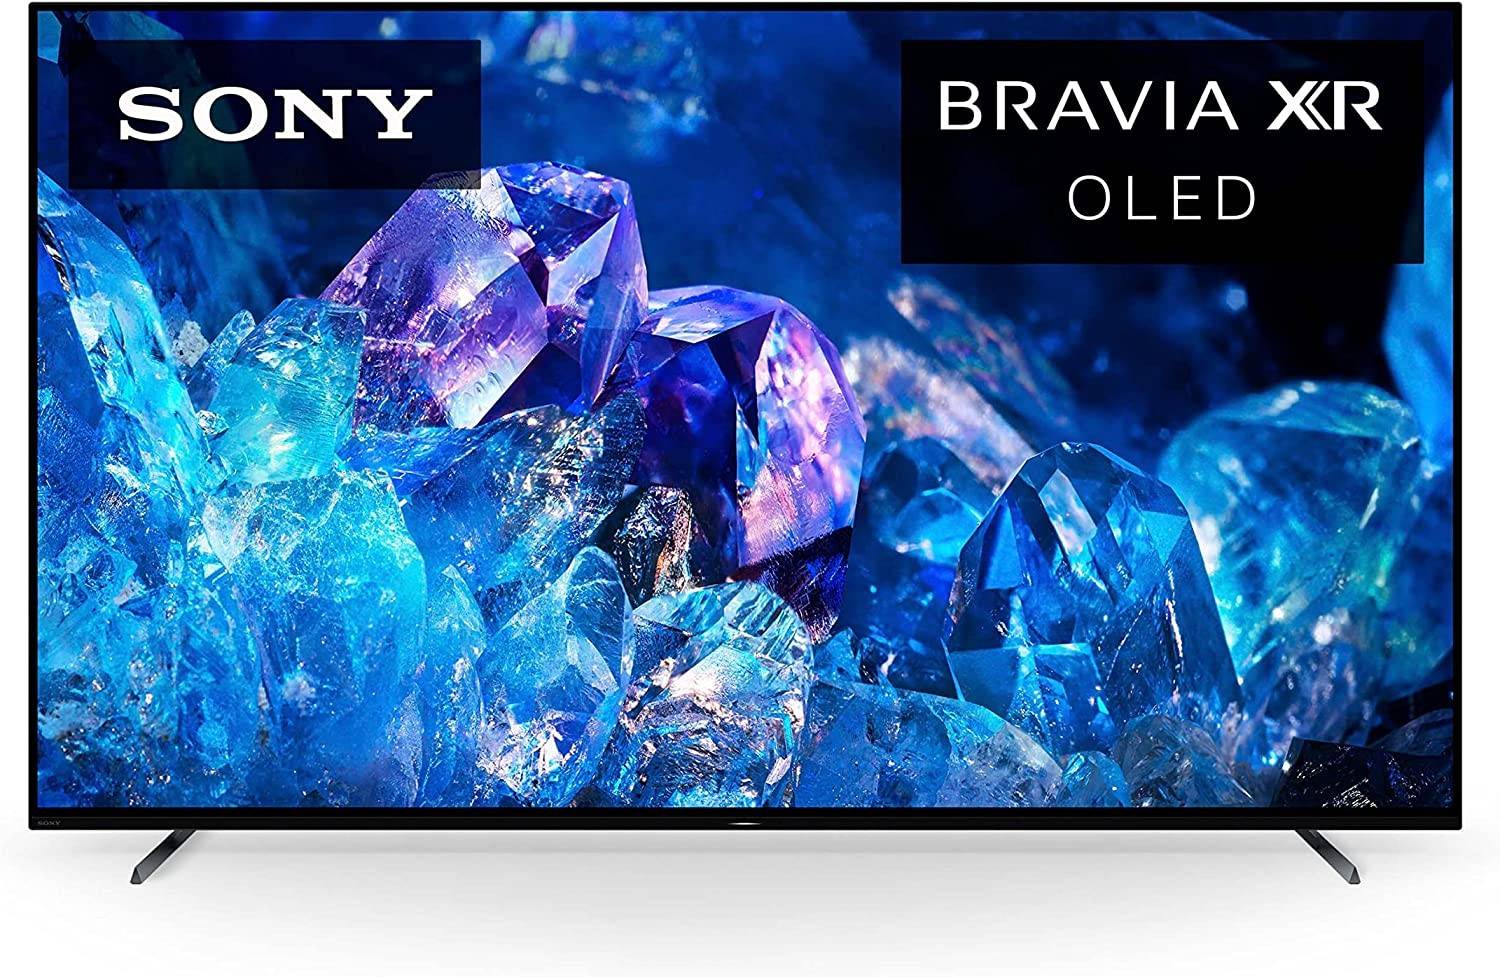 Sony A80K Series BRAVIA XR Smart TV